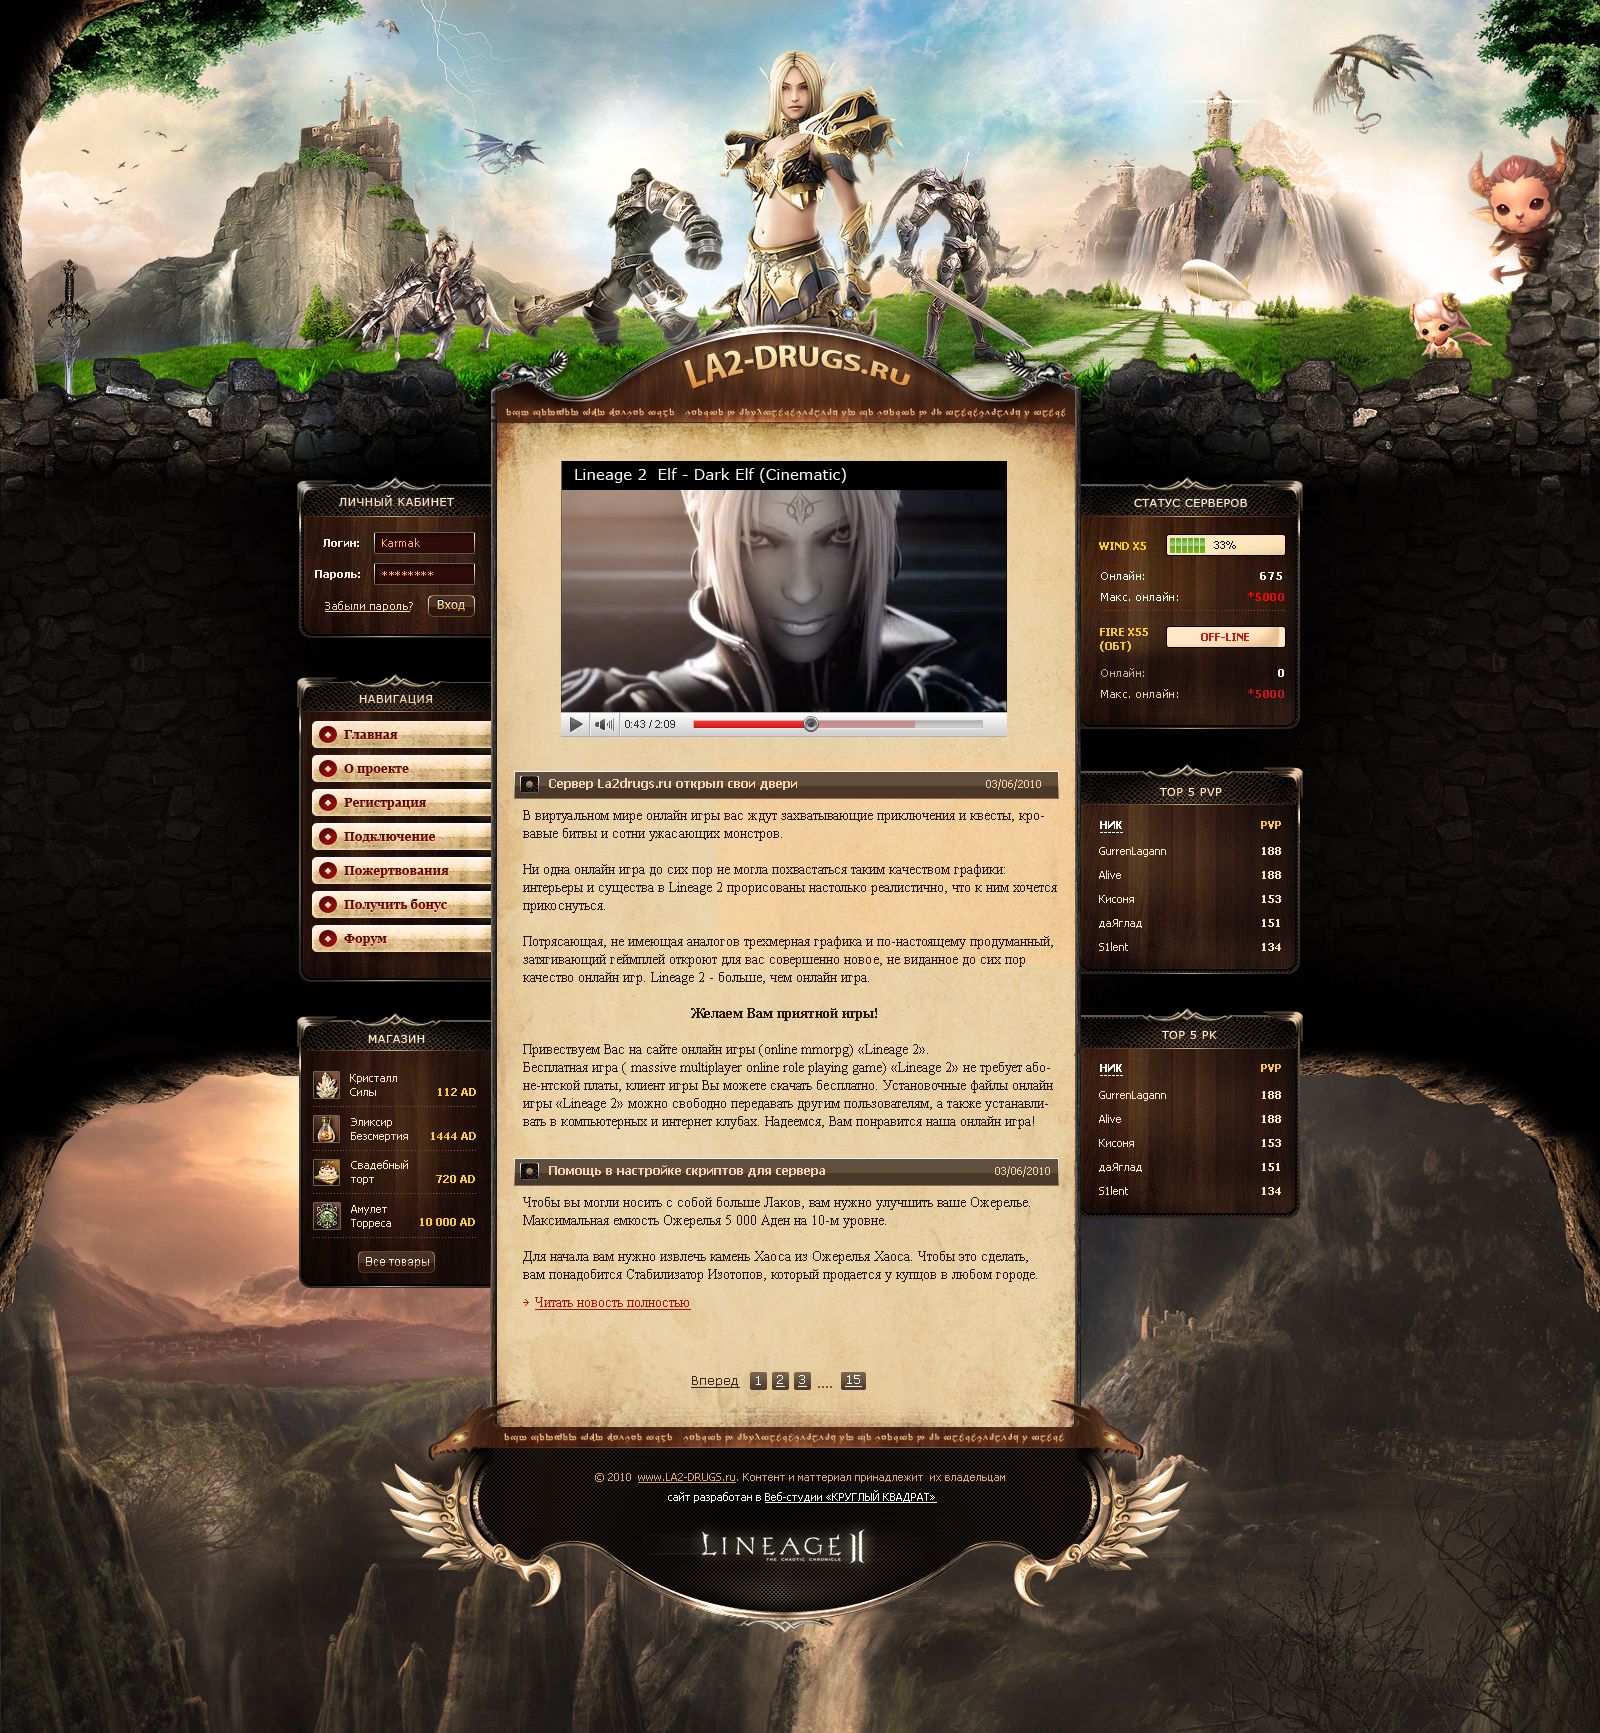 Дизайн сайта «La2-Drugs» для сервера MMORPG игры Lineage II